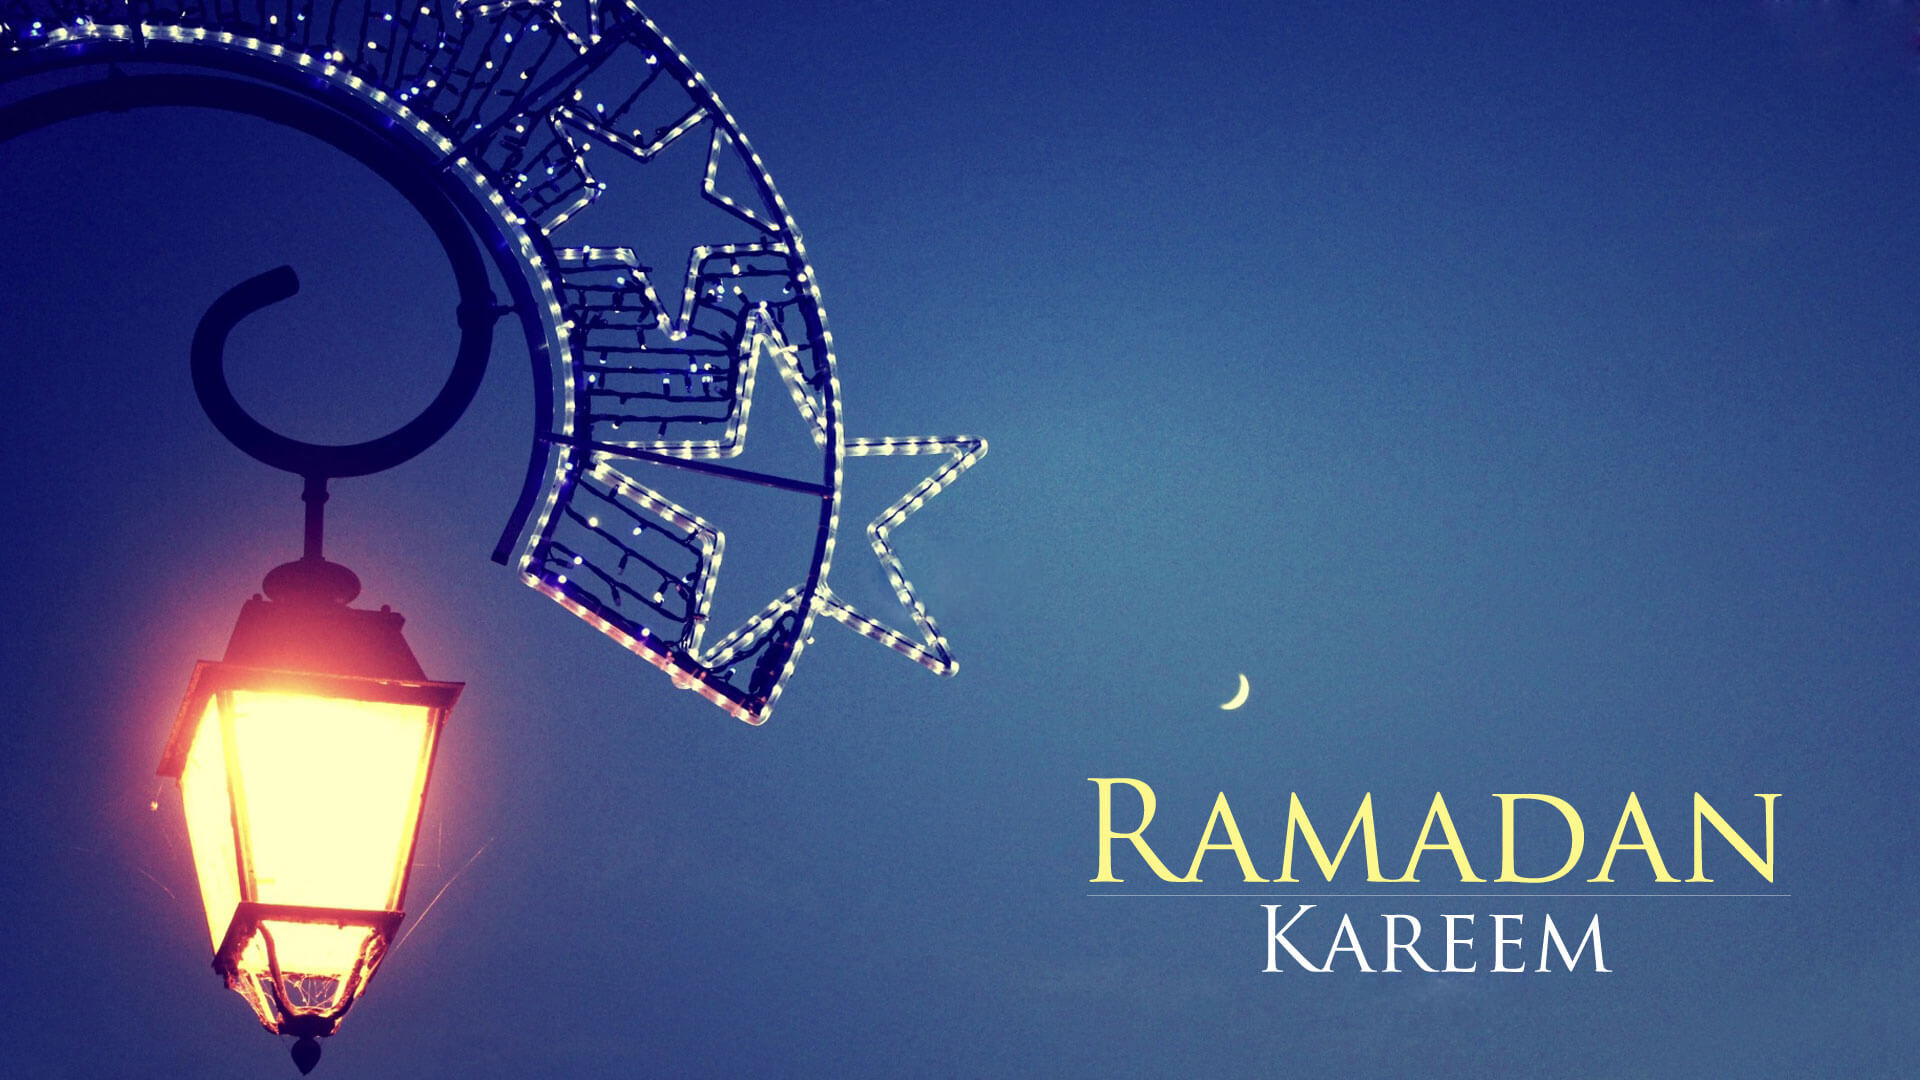 Ramadan Kareem wallpapers HD Photos Pics for wishes